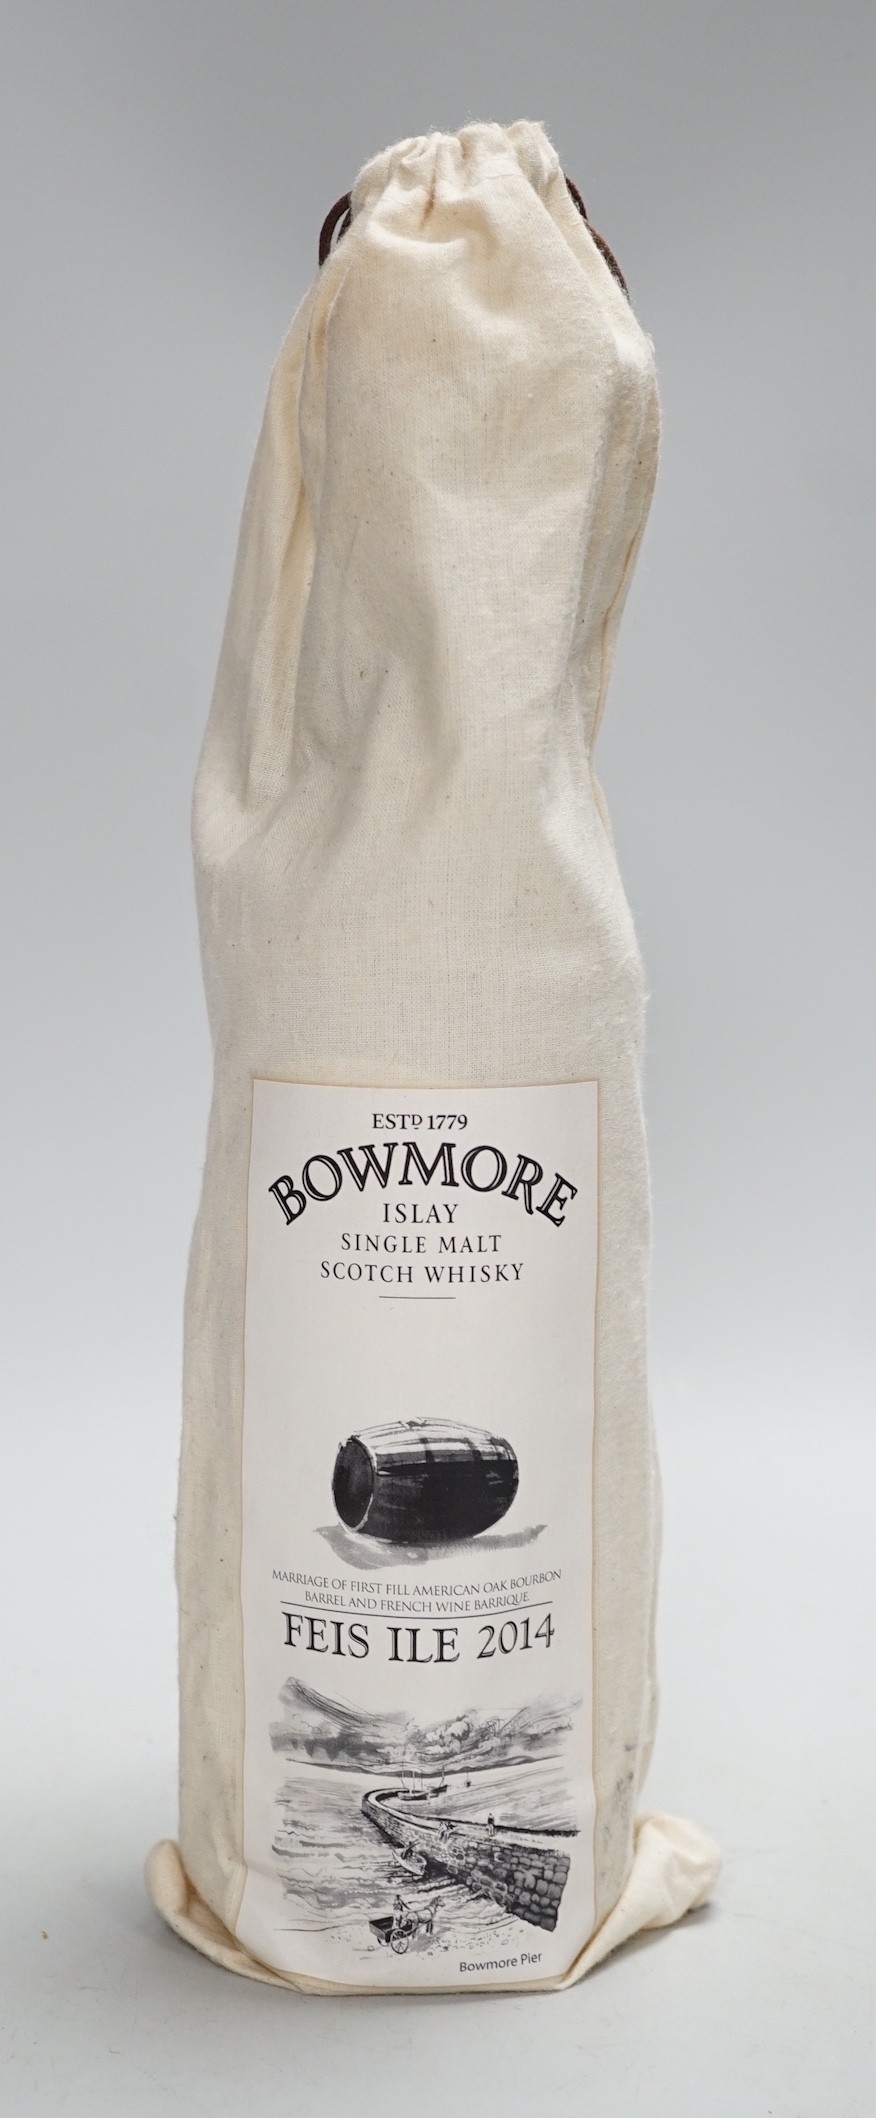 A bottle of Bowmore Feis Ile 2014 single malt whisky